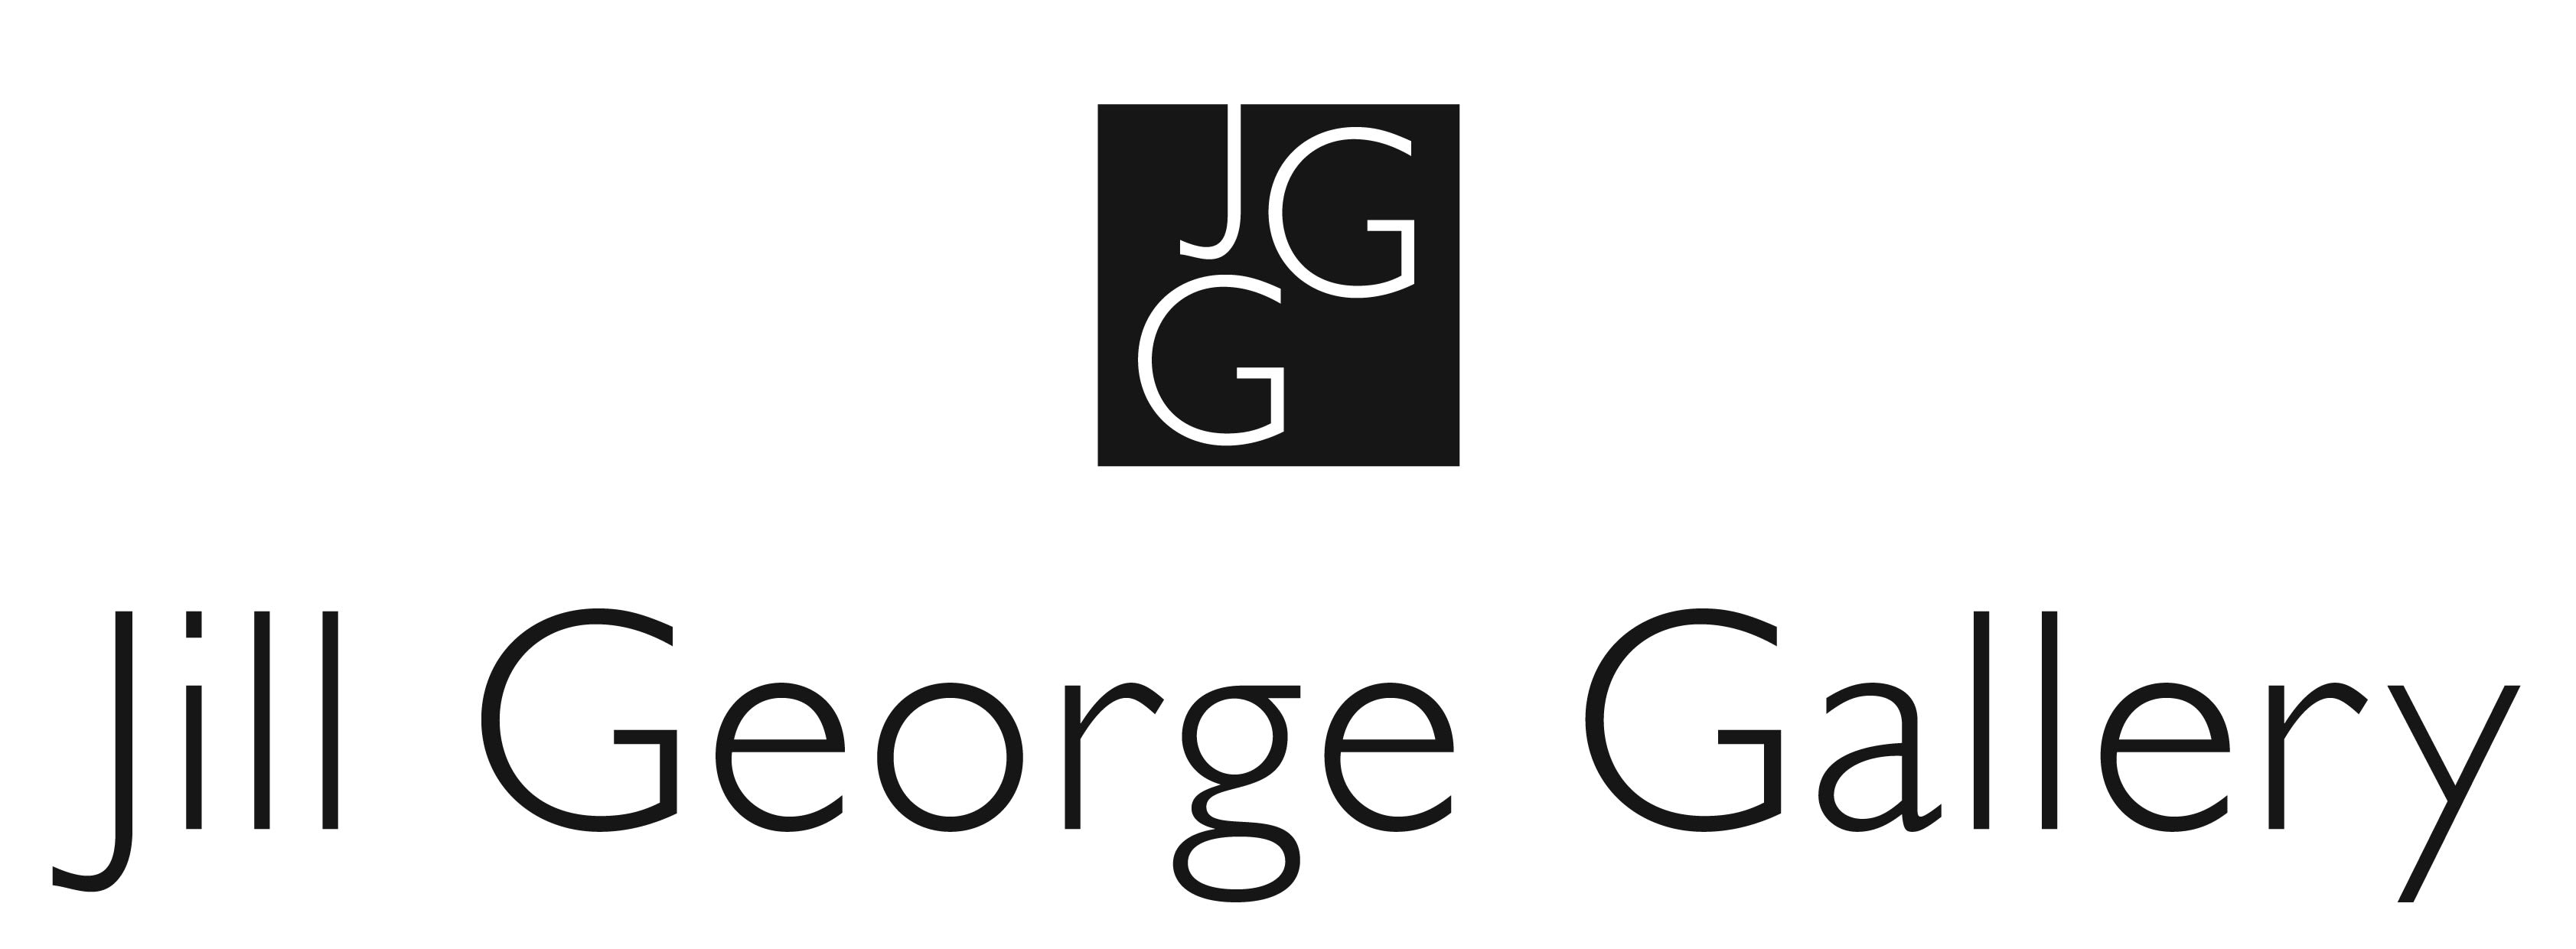 Jill George Gallery Ltd company logo